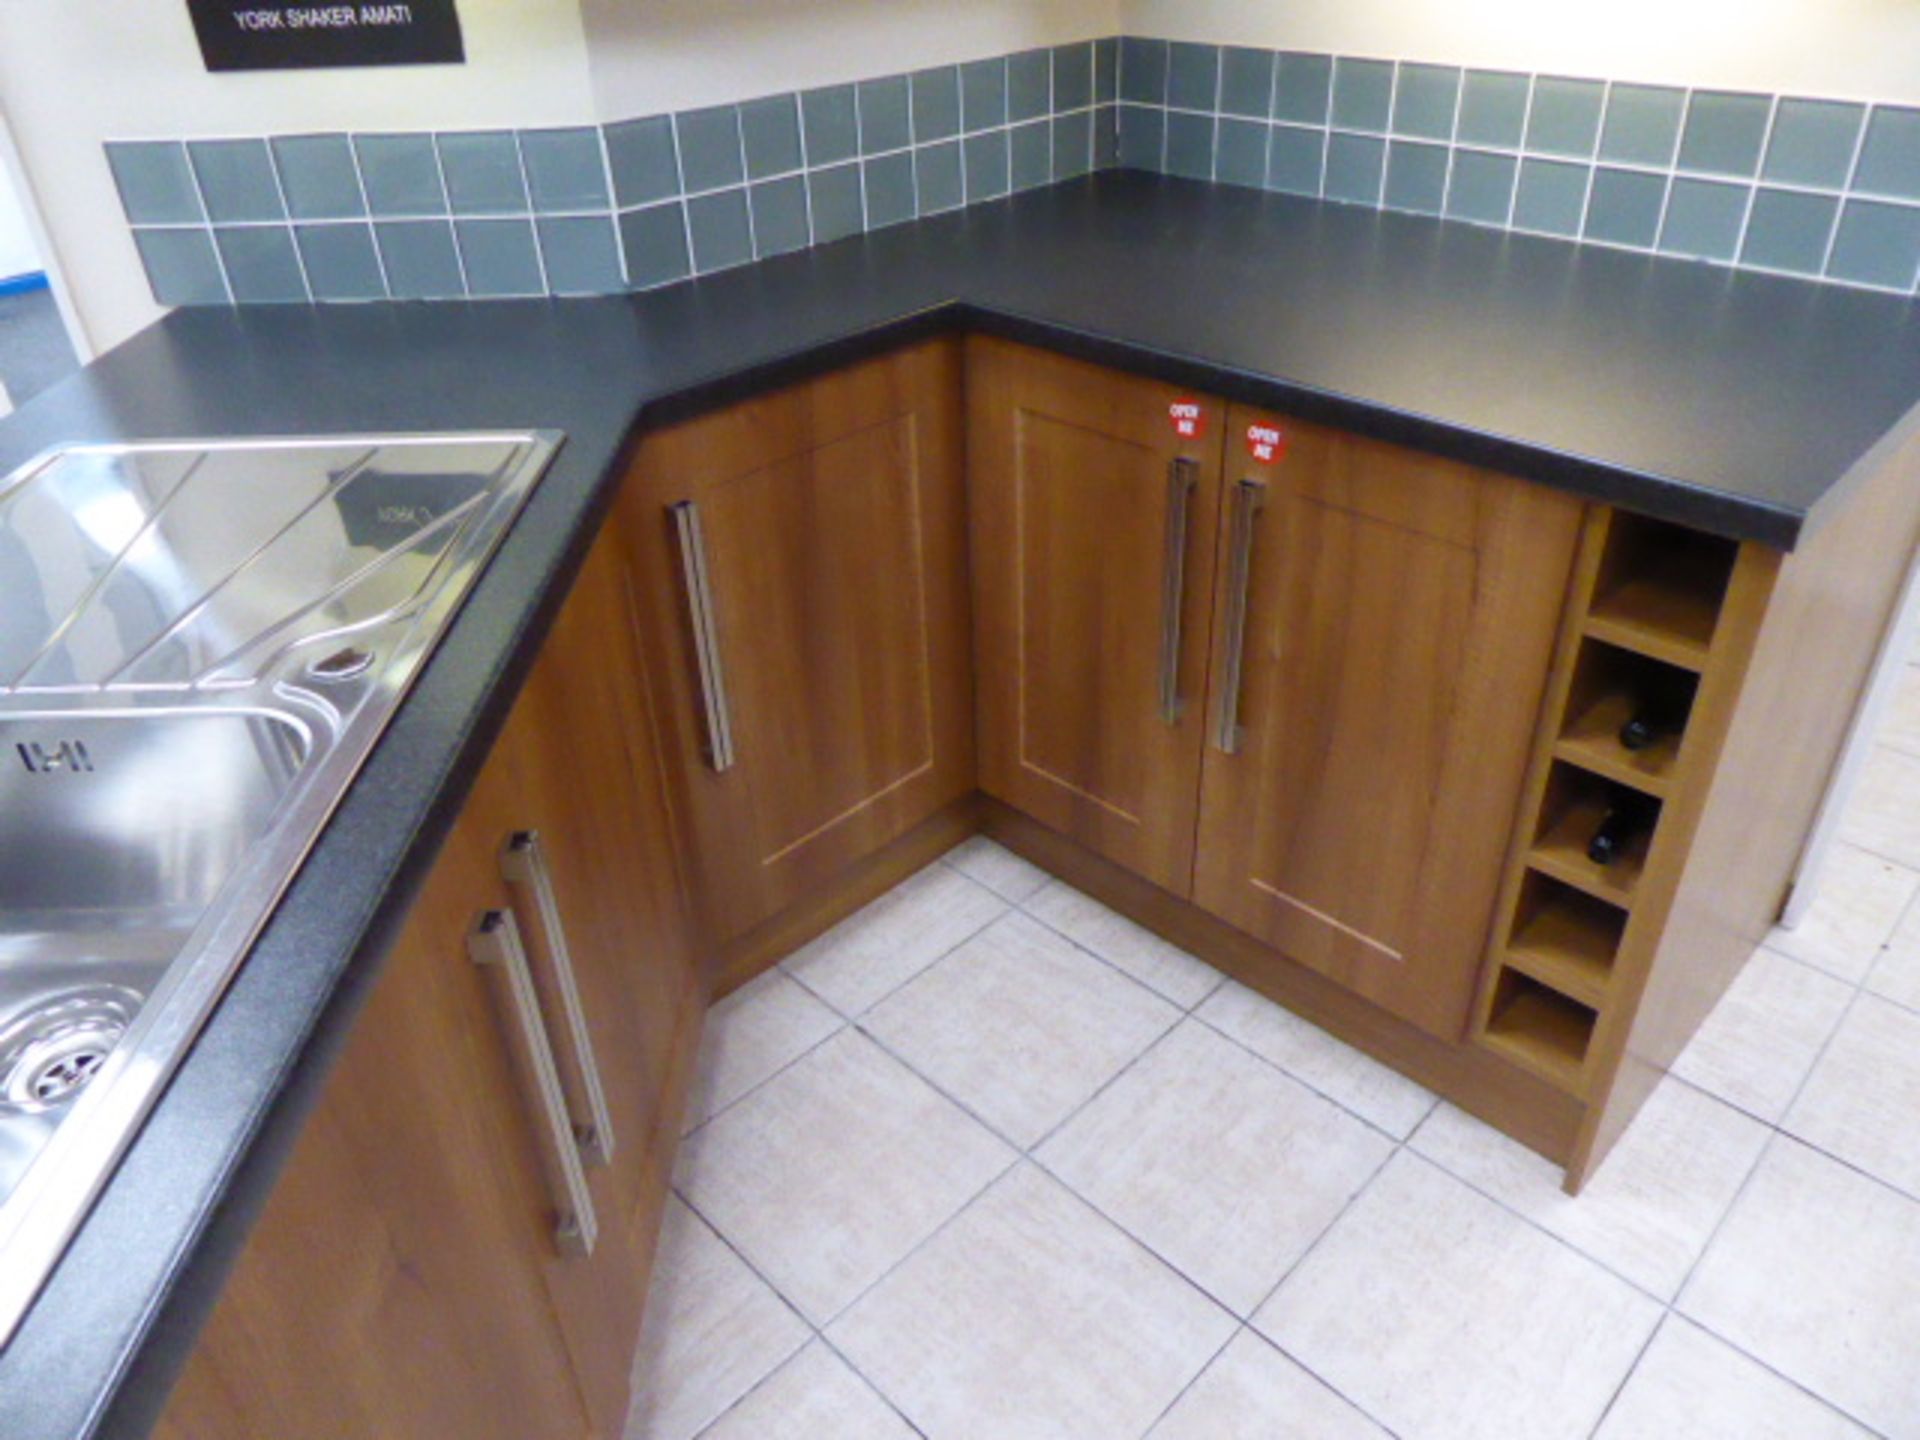 York Shaker Amati kitchen with granite effect laminate worktops. Max measurement is 270cm x 180cm. - Image 7 of 10